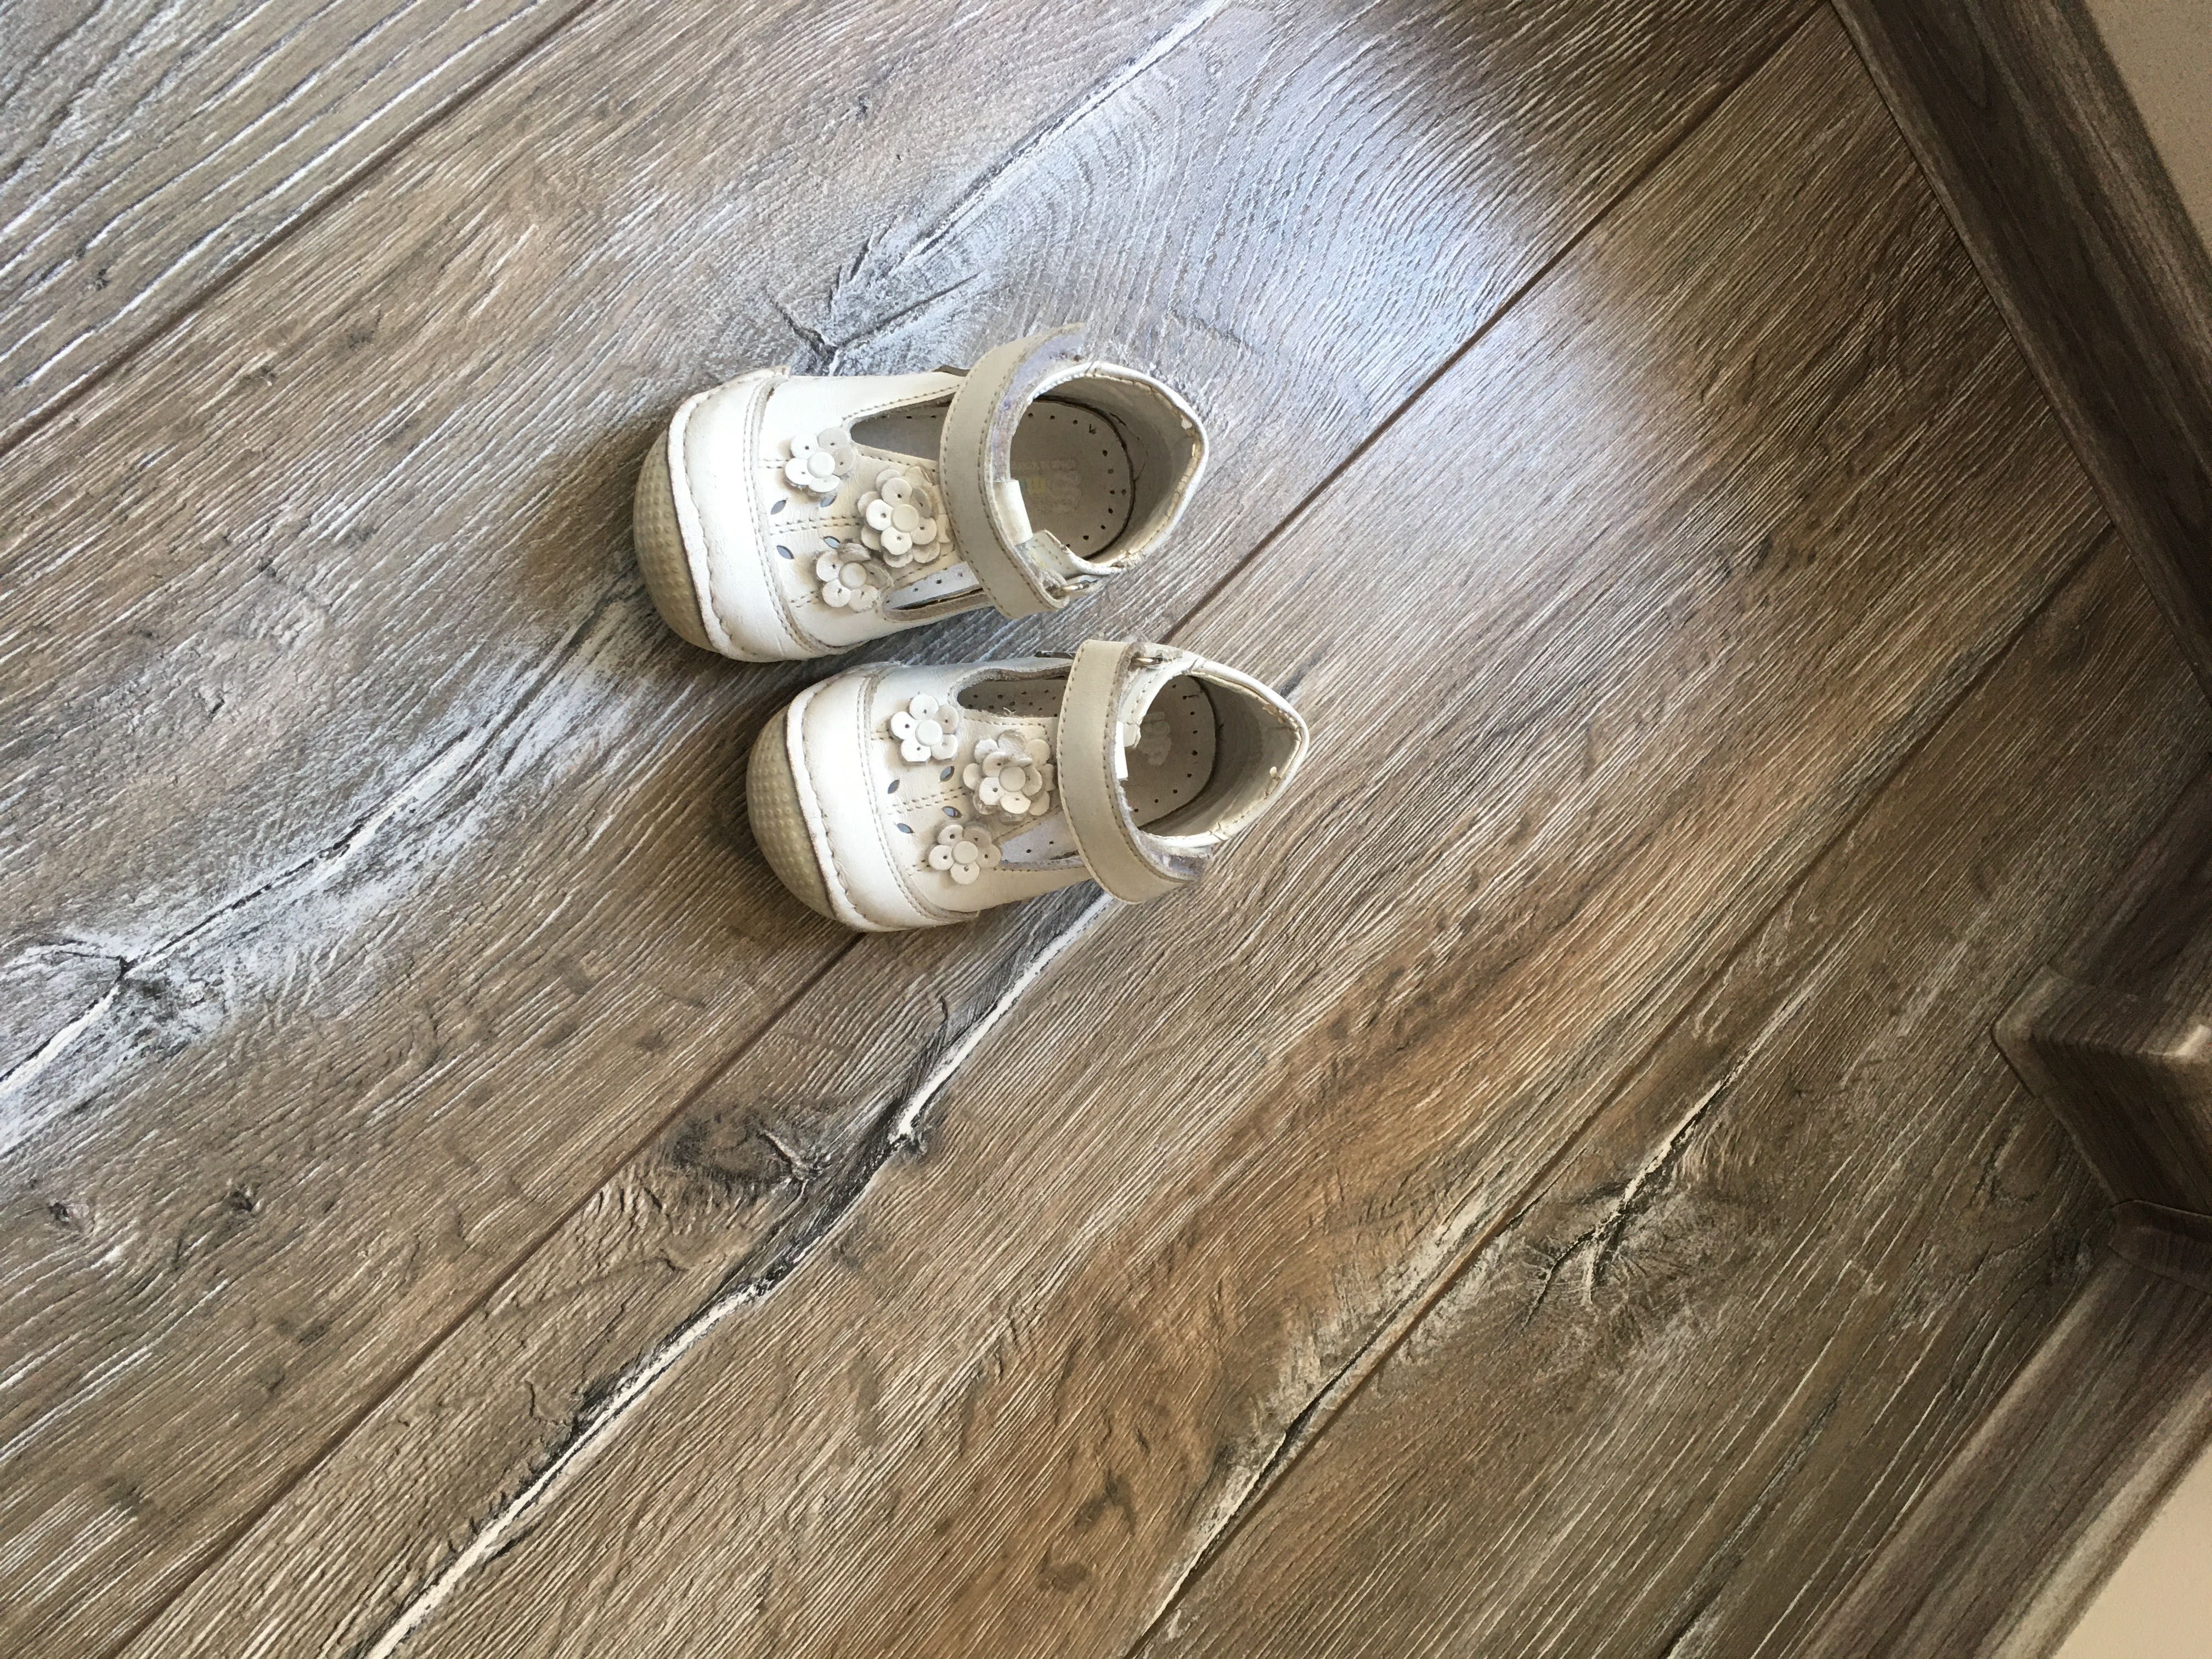 Запазени бебешки обувки за току-що проходили деца